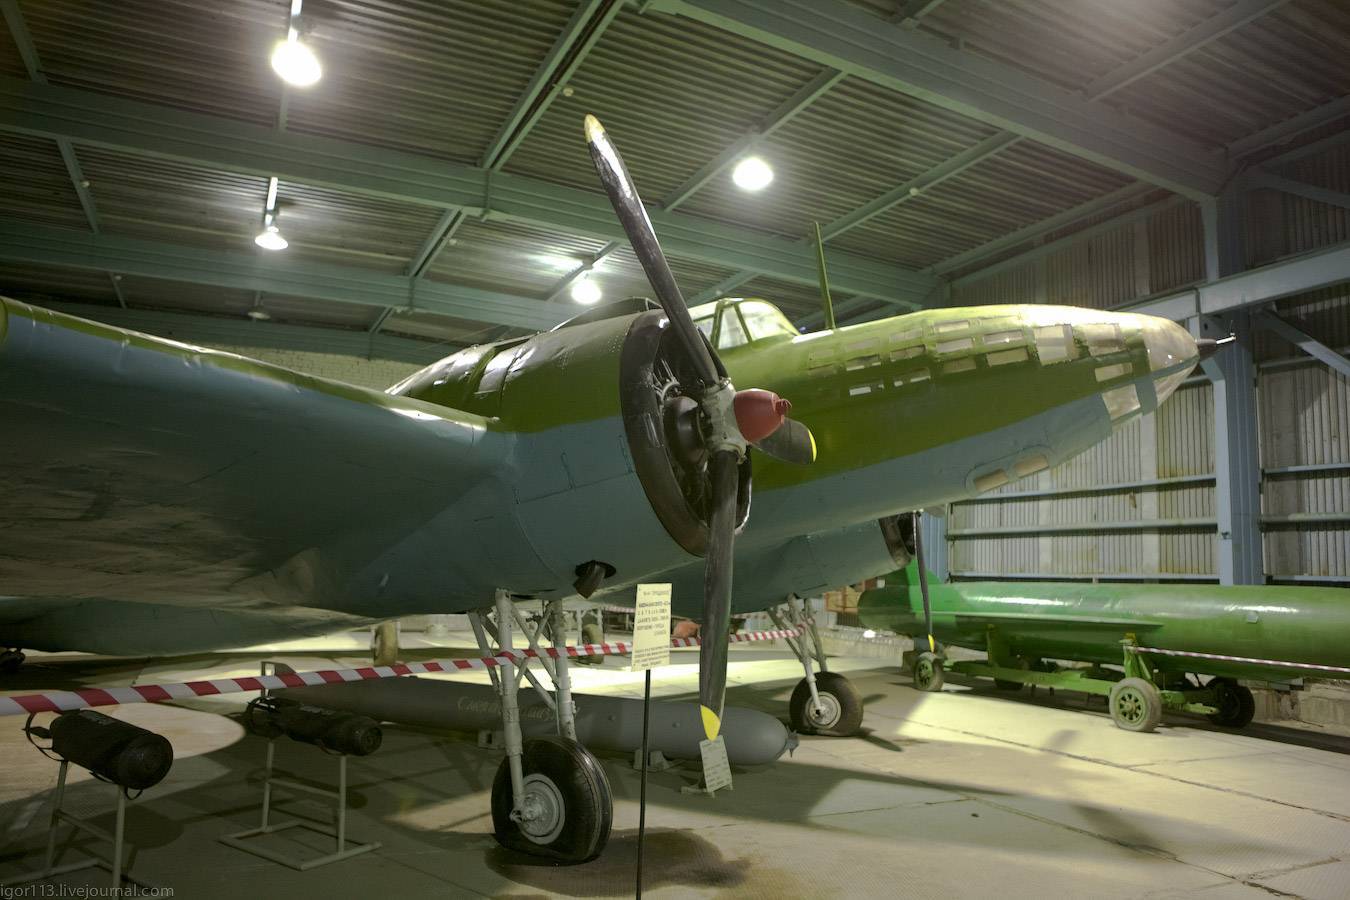 Самолет ил-28: краткое описание, технические характеристики, фото